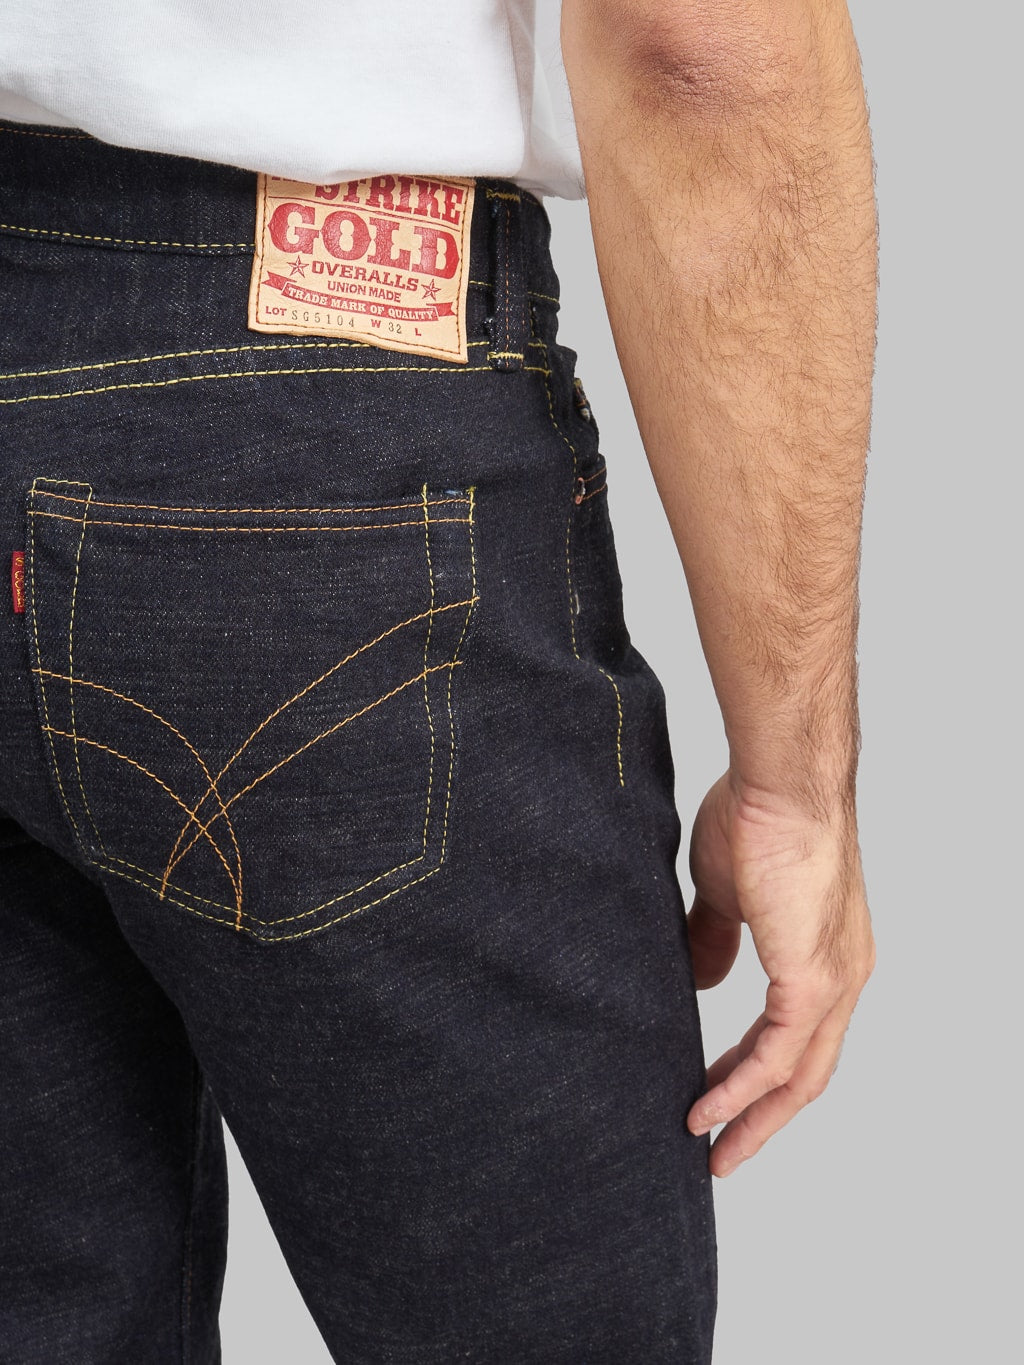 The Strike Gold 5104 Slub Grey Weft Straight Tapered Jeans back pocket